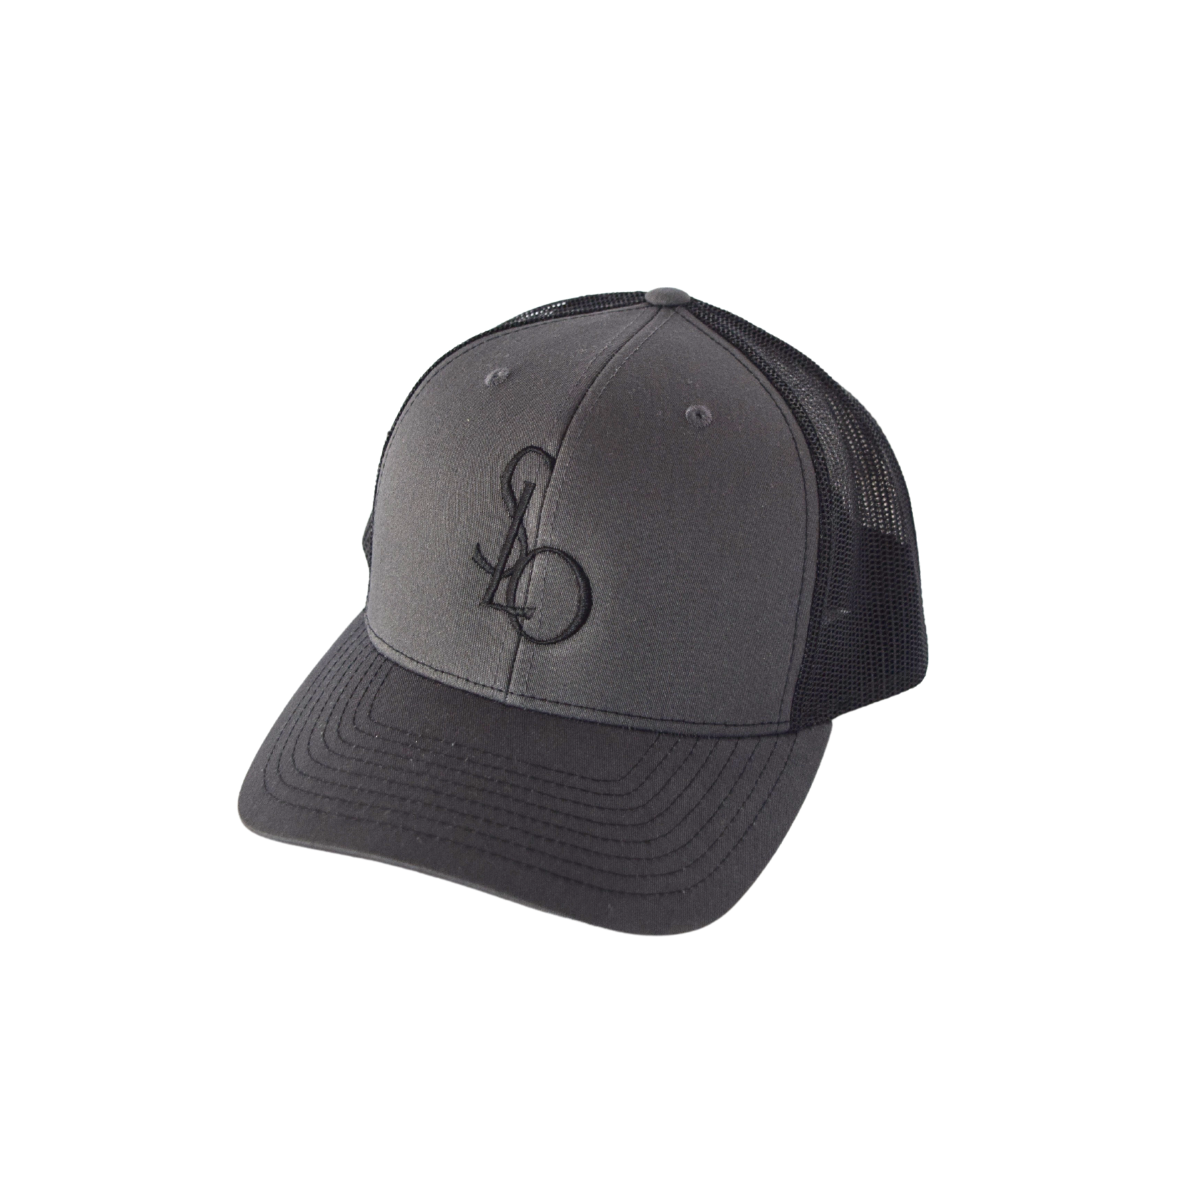 Branded SLO Designer-Inspired Baseball Hat in Charcoal & Black